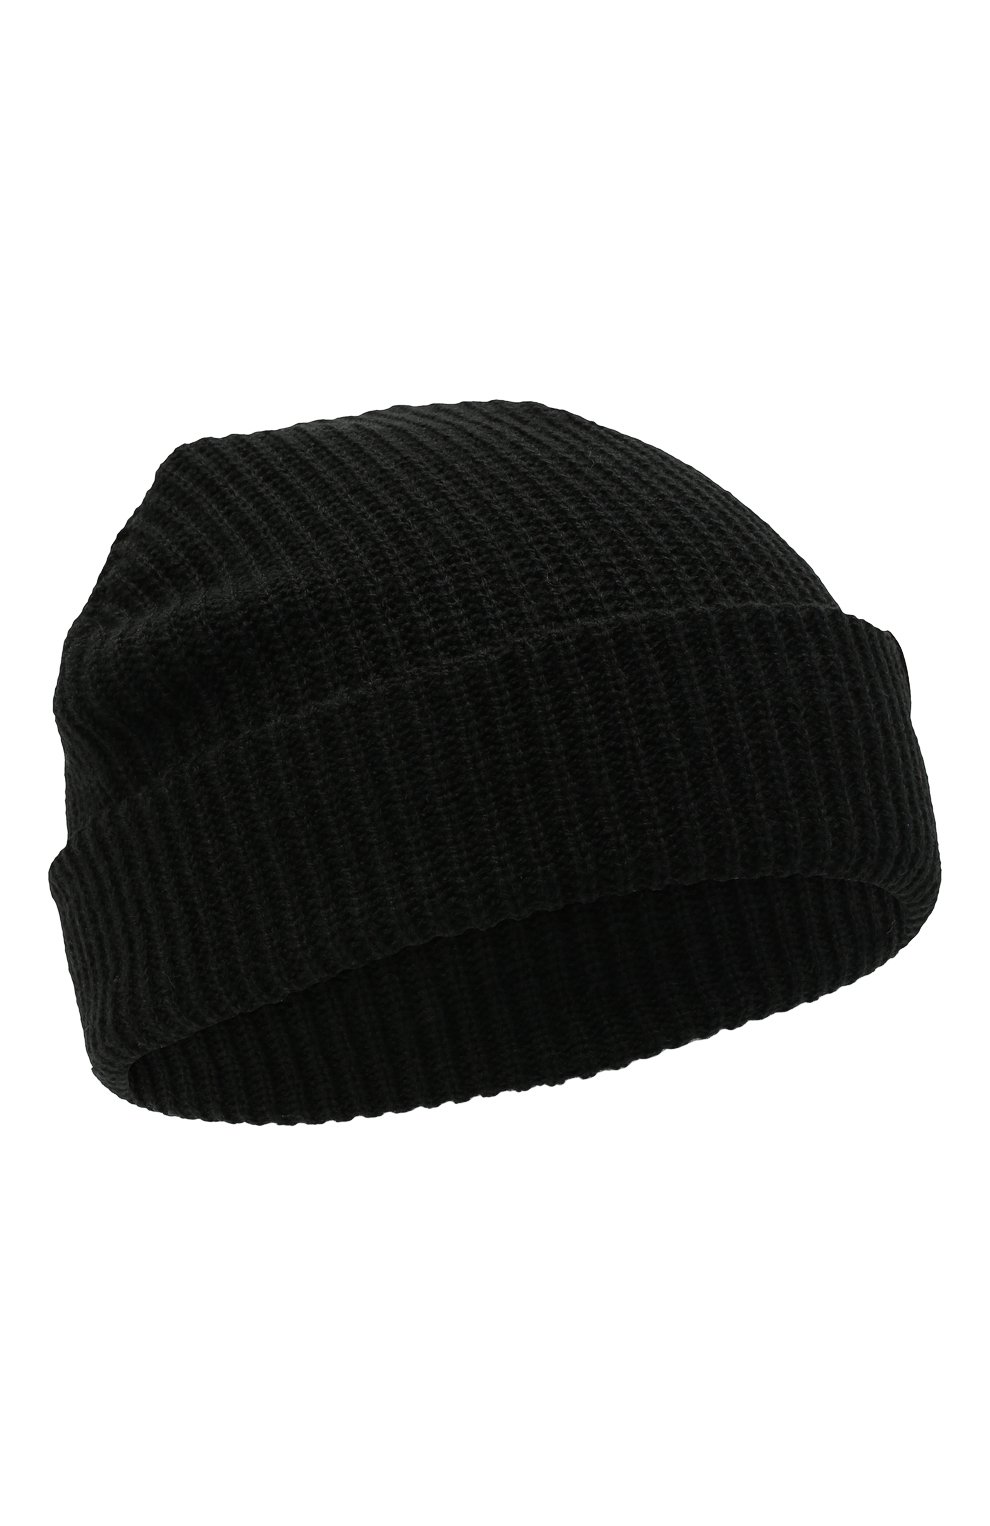 Мужская шапка HARLEY-DAVIDSON черного цвета, арт. 97601-21VM | Фото 1 (Материал: Текстиль, Синтетический материал; Кросс-КТ: Трикотаж)